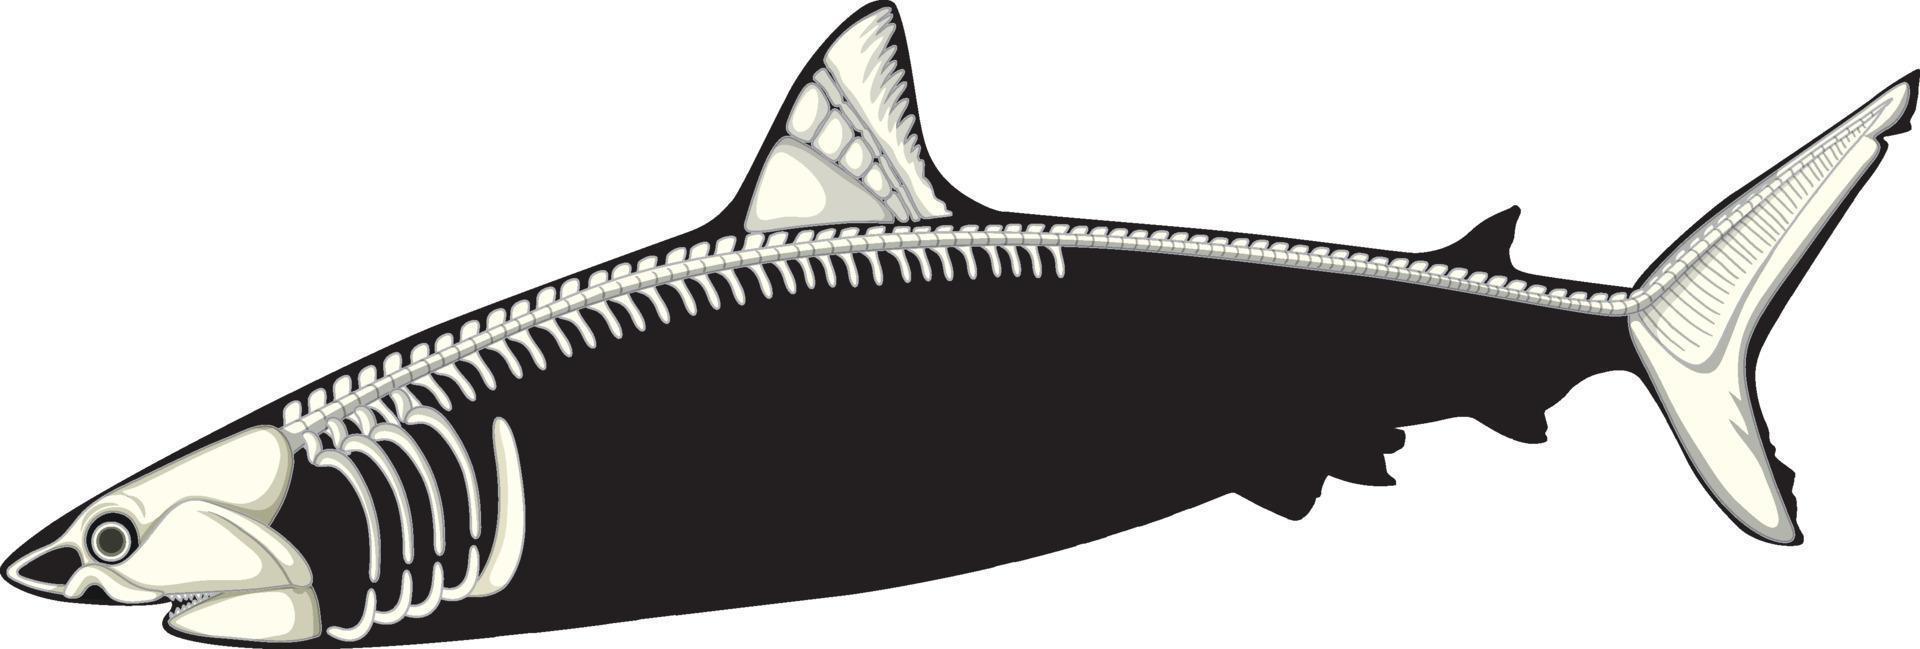 Anatomy of shark with skeleton vector